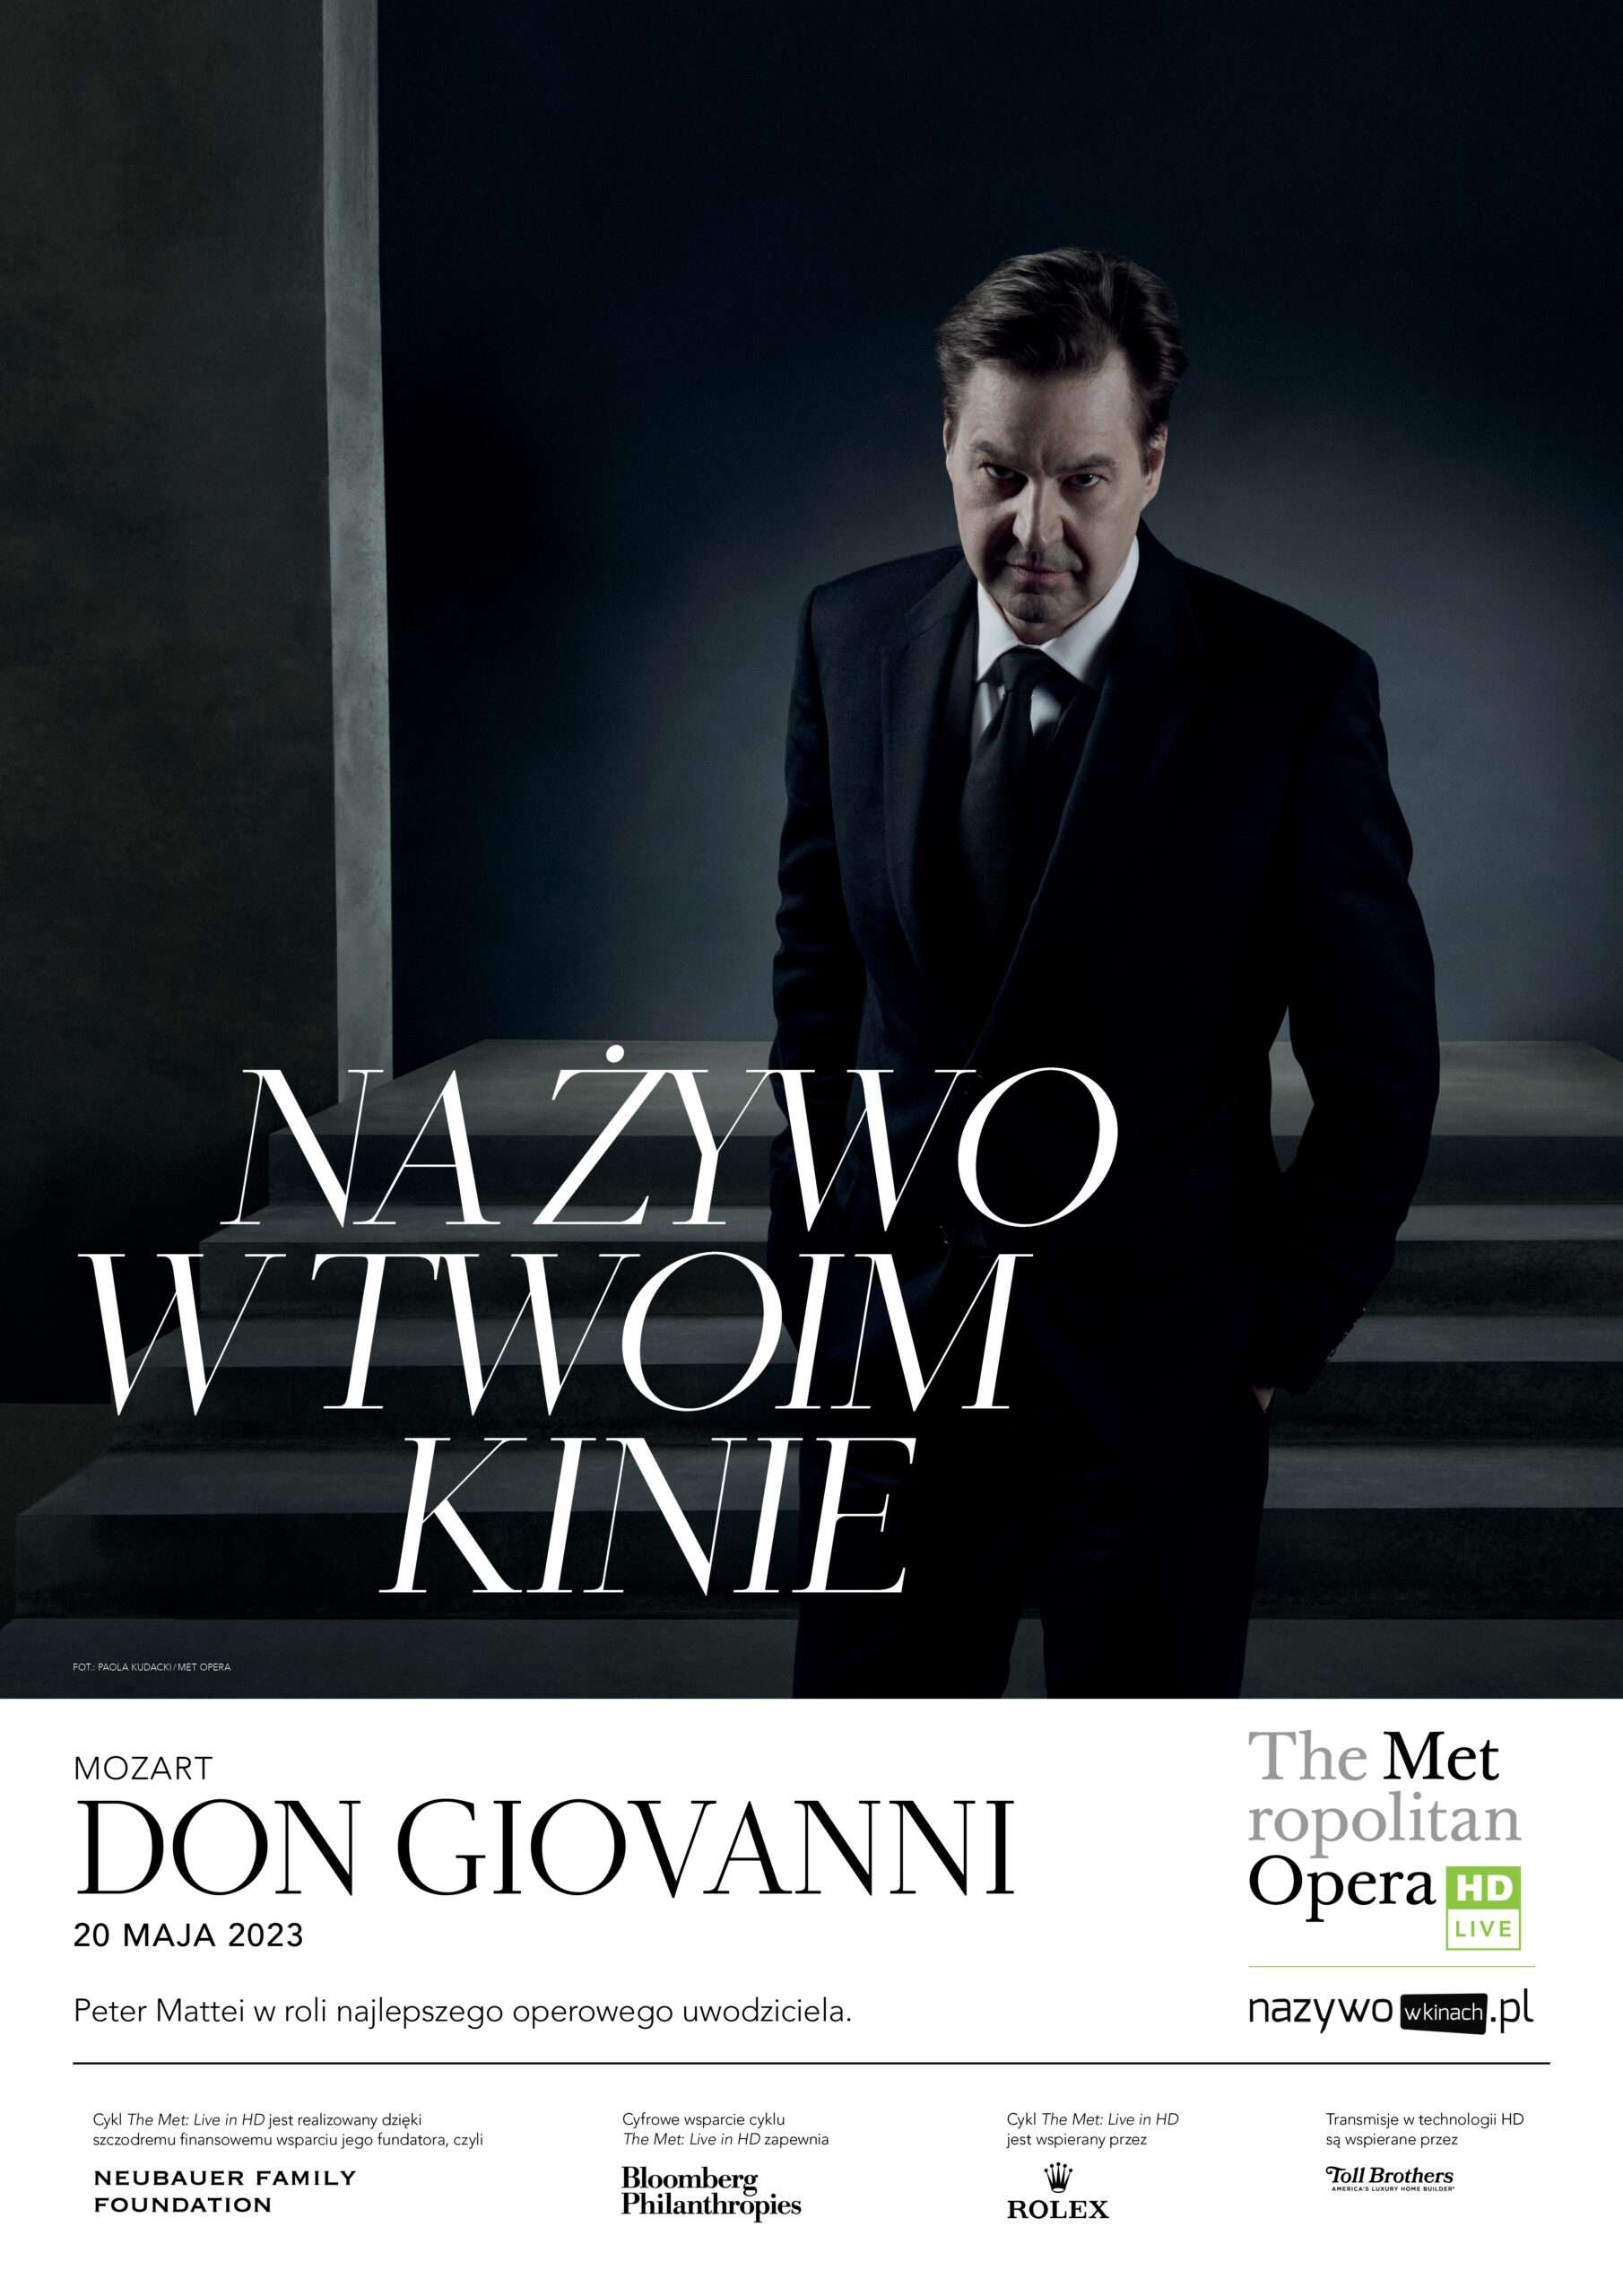 The Met: Don Giovanni at the Światowid Cinema in Elbląg